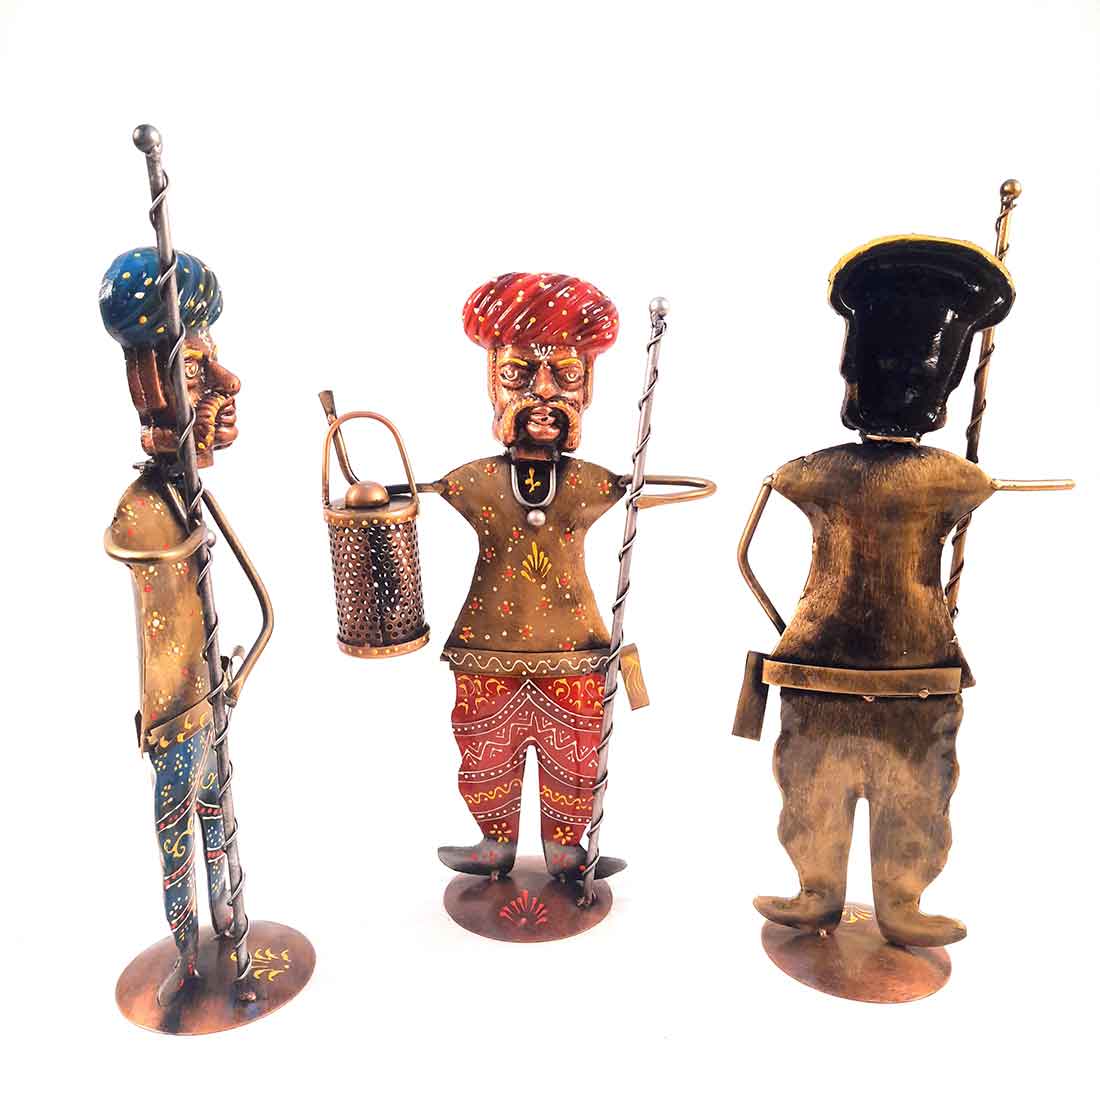 Village Men - Human Figurine - Unique Showpiece for Living Room - 15 Inch-Set of 3 - ApkaMart